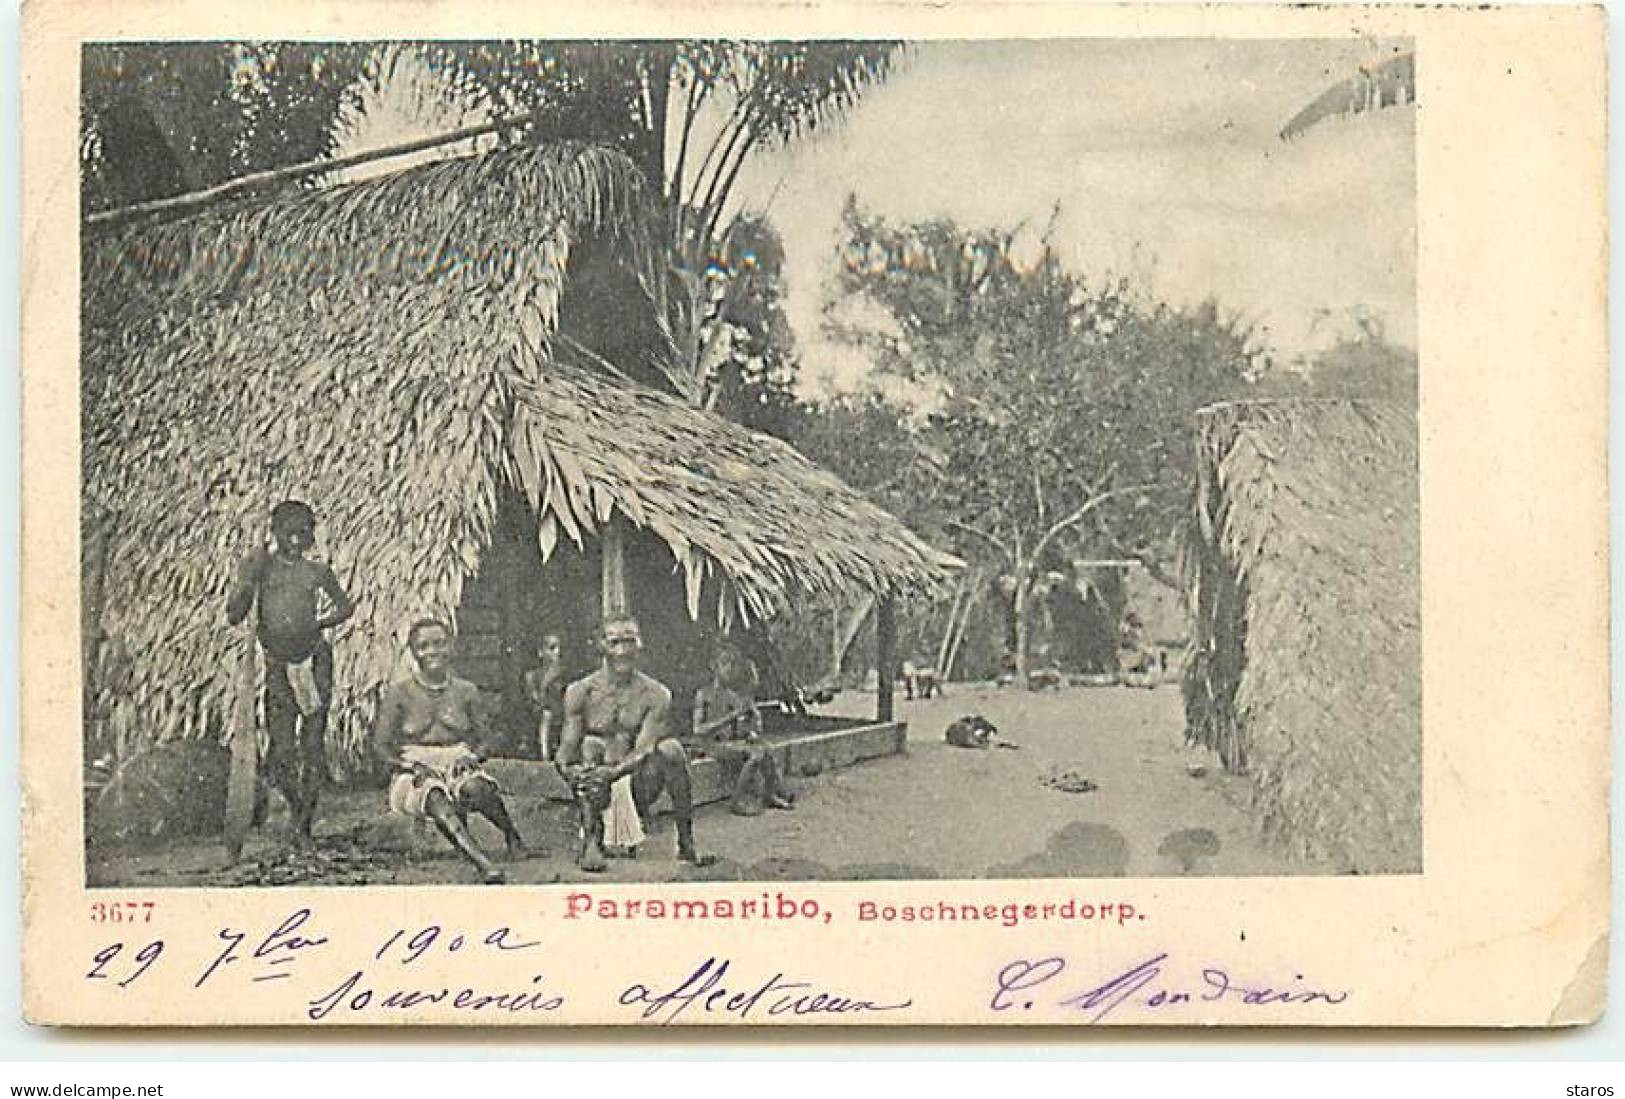 Surinam - PARAMARIBO - Boschnegerdorp - Surinam